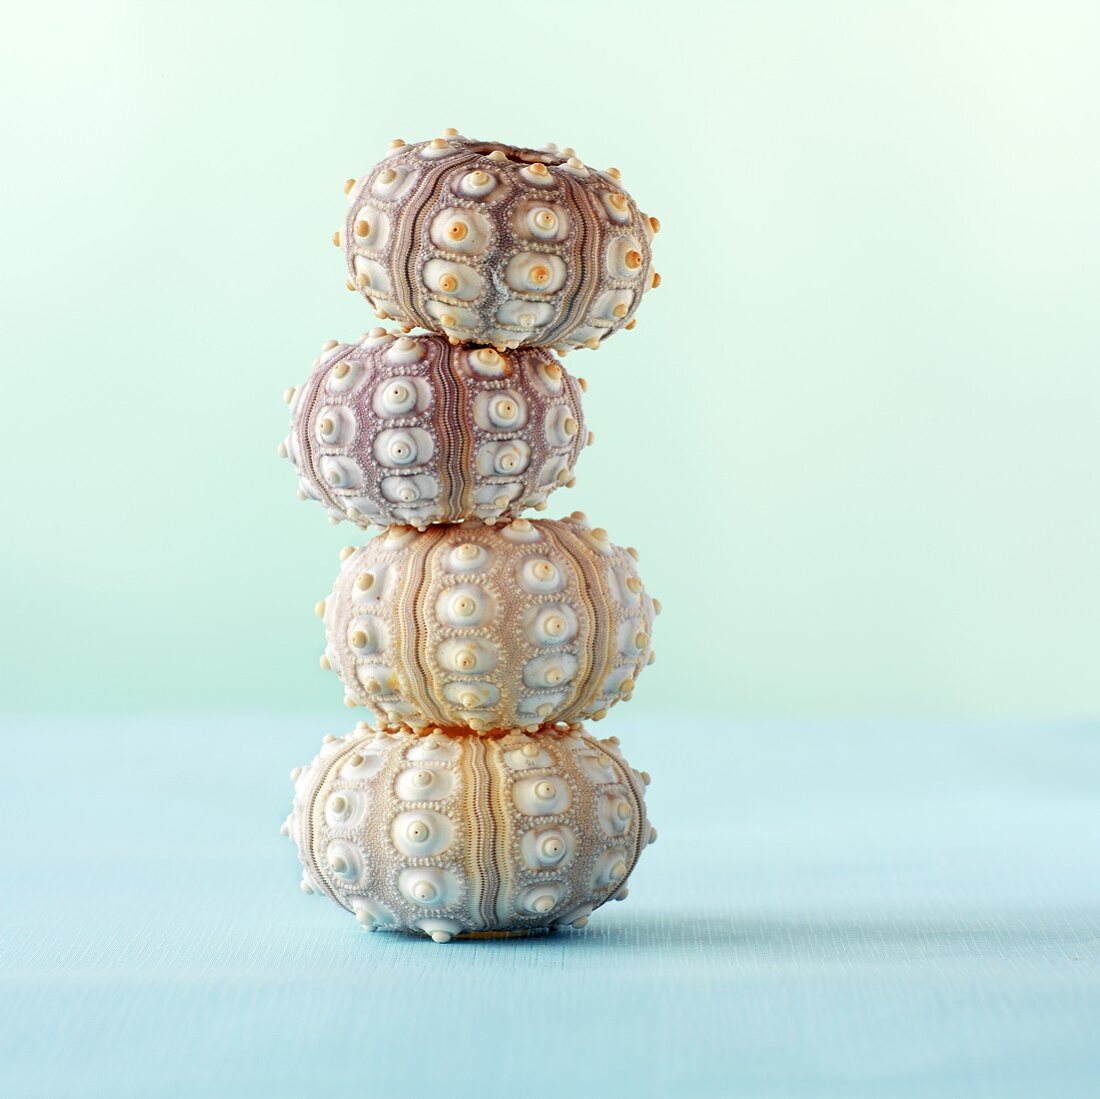 A stack of sea urchin shells